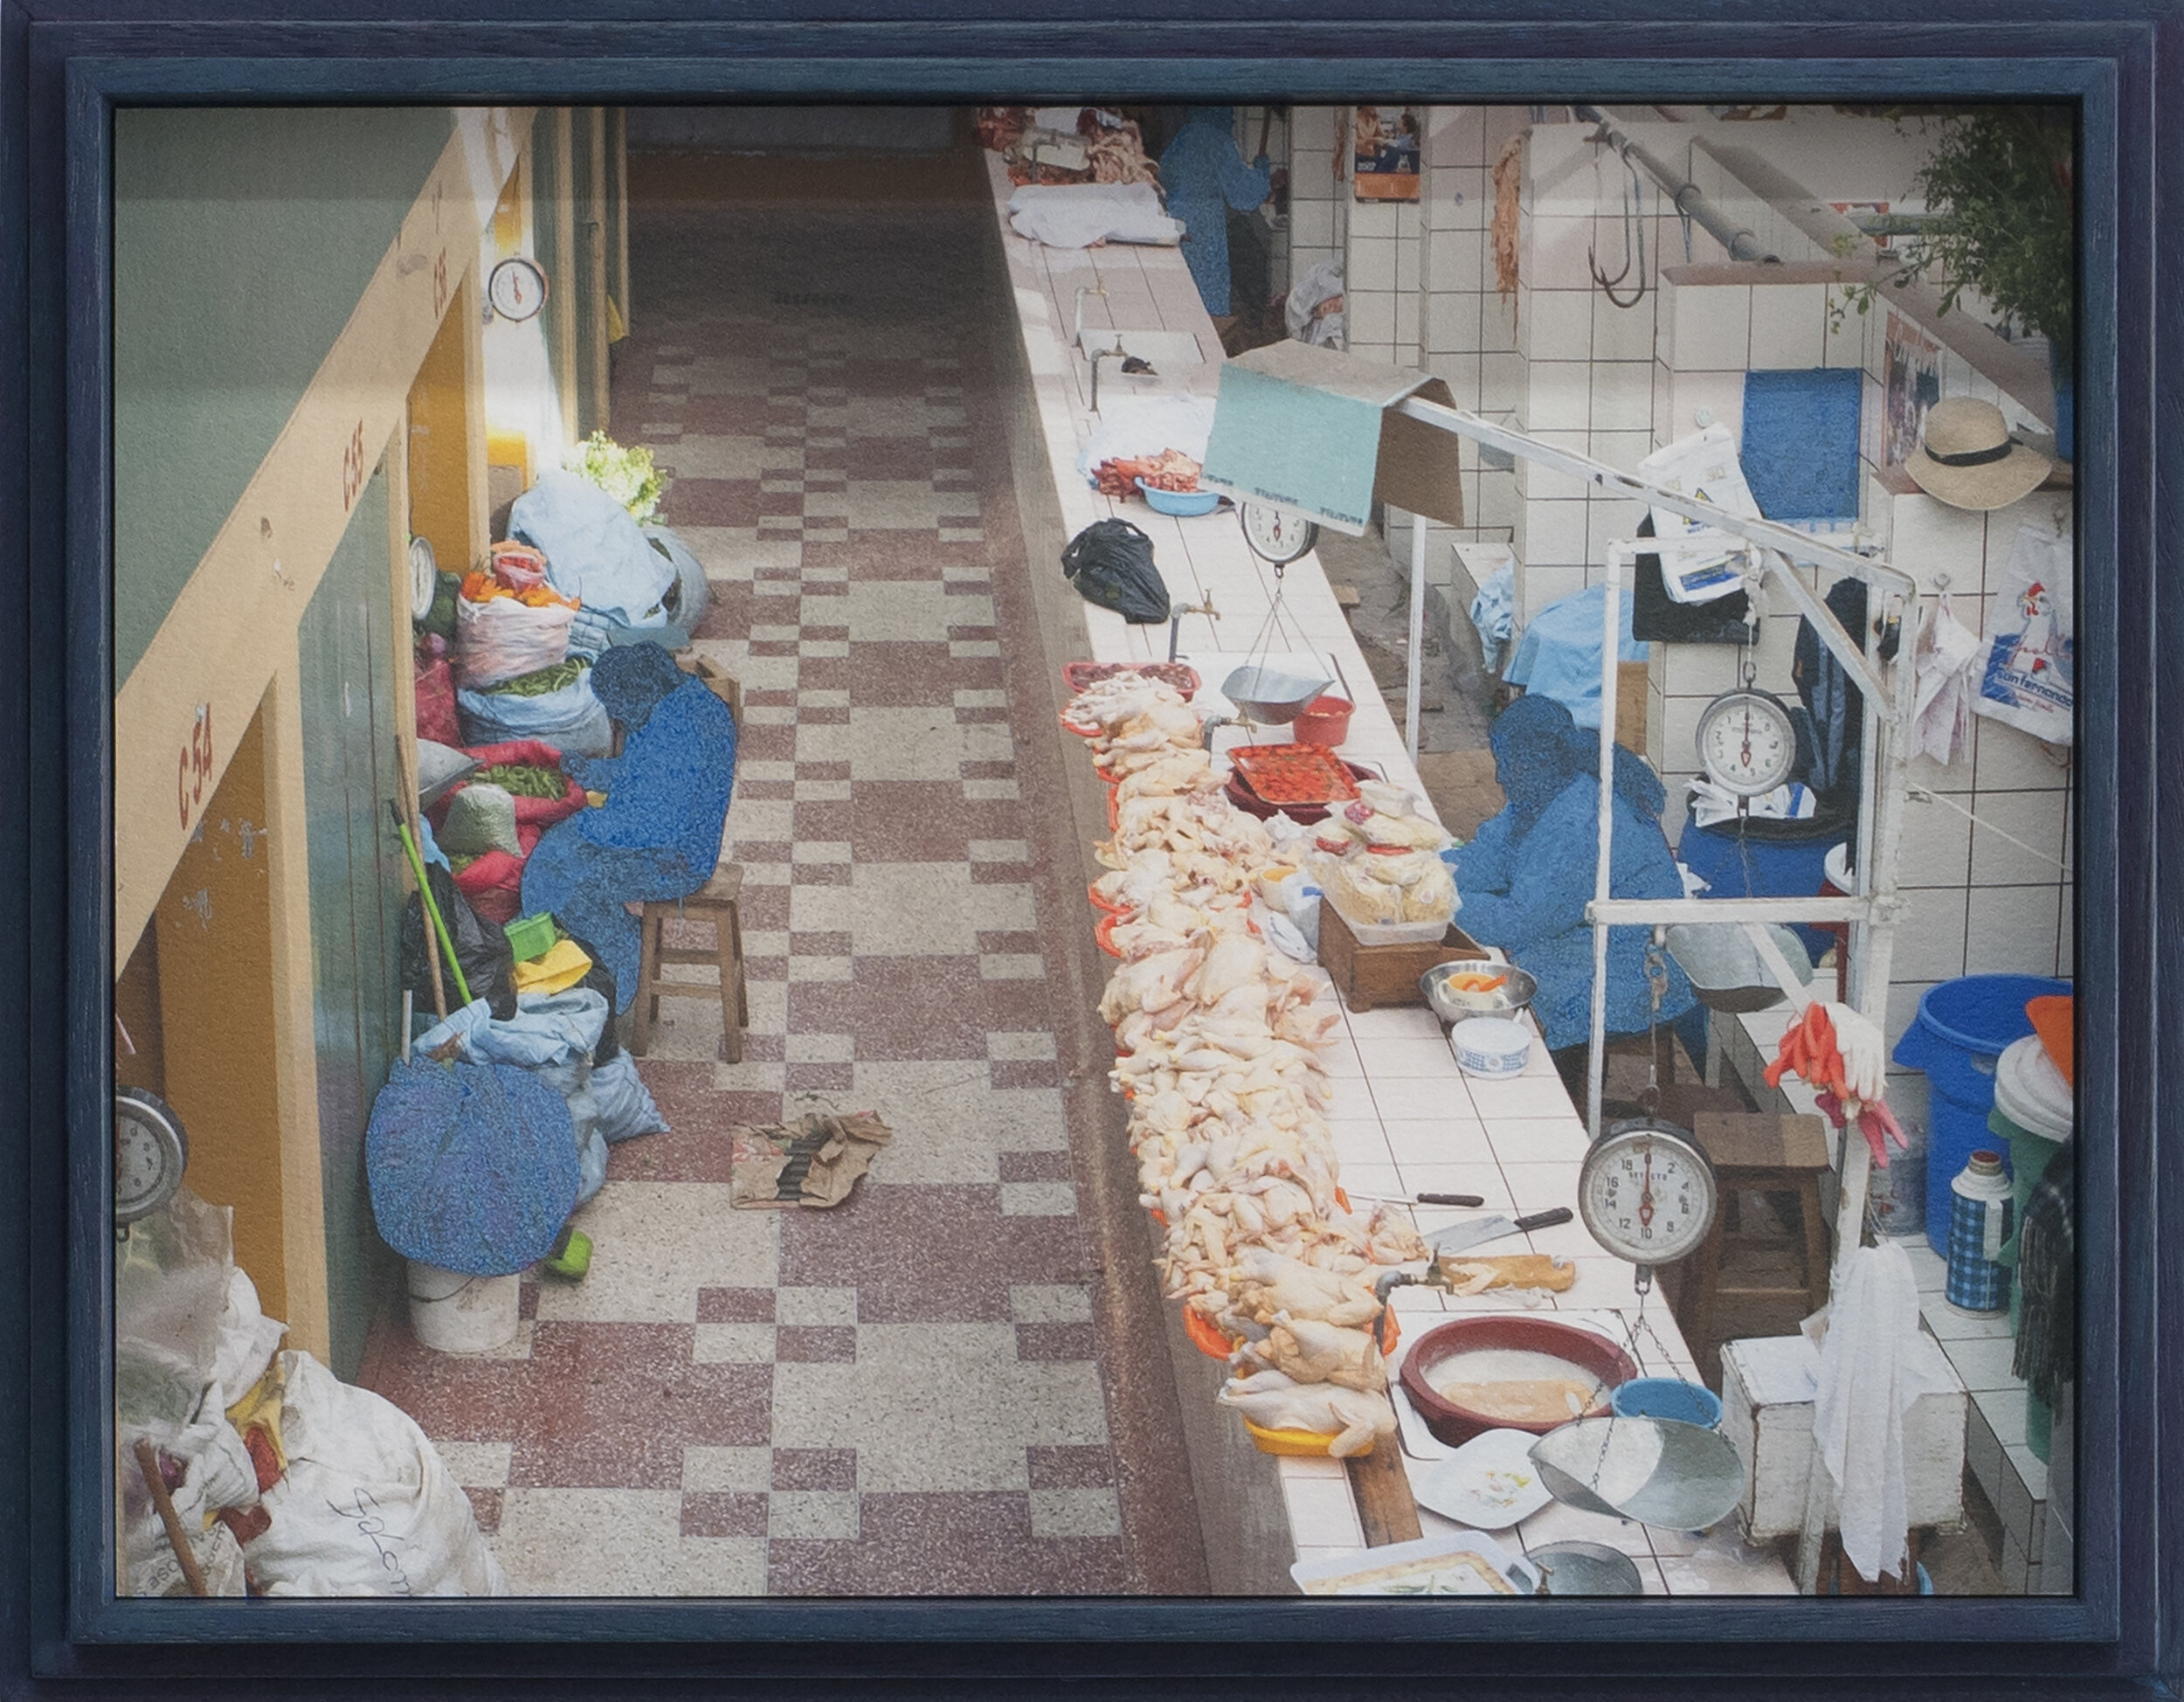  Myeongsoo Kim, Meat market in Copacabana, Bolivia, 2018, paint on photograph mounted on Dibond, 8 1/4" x 10 1/2" (framed) 